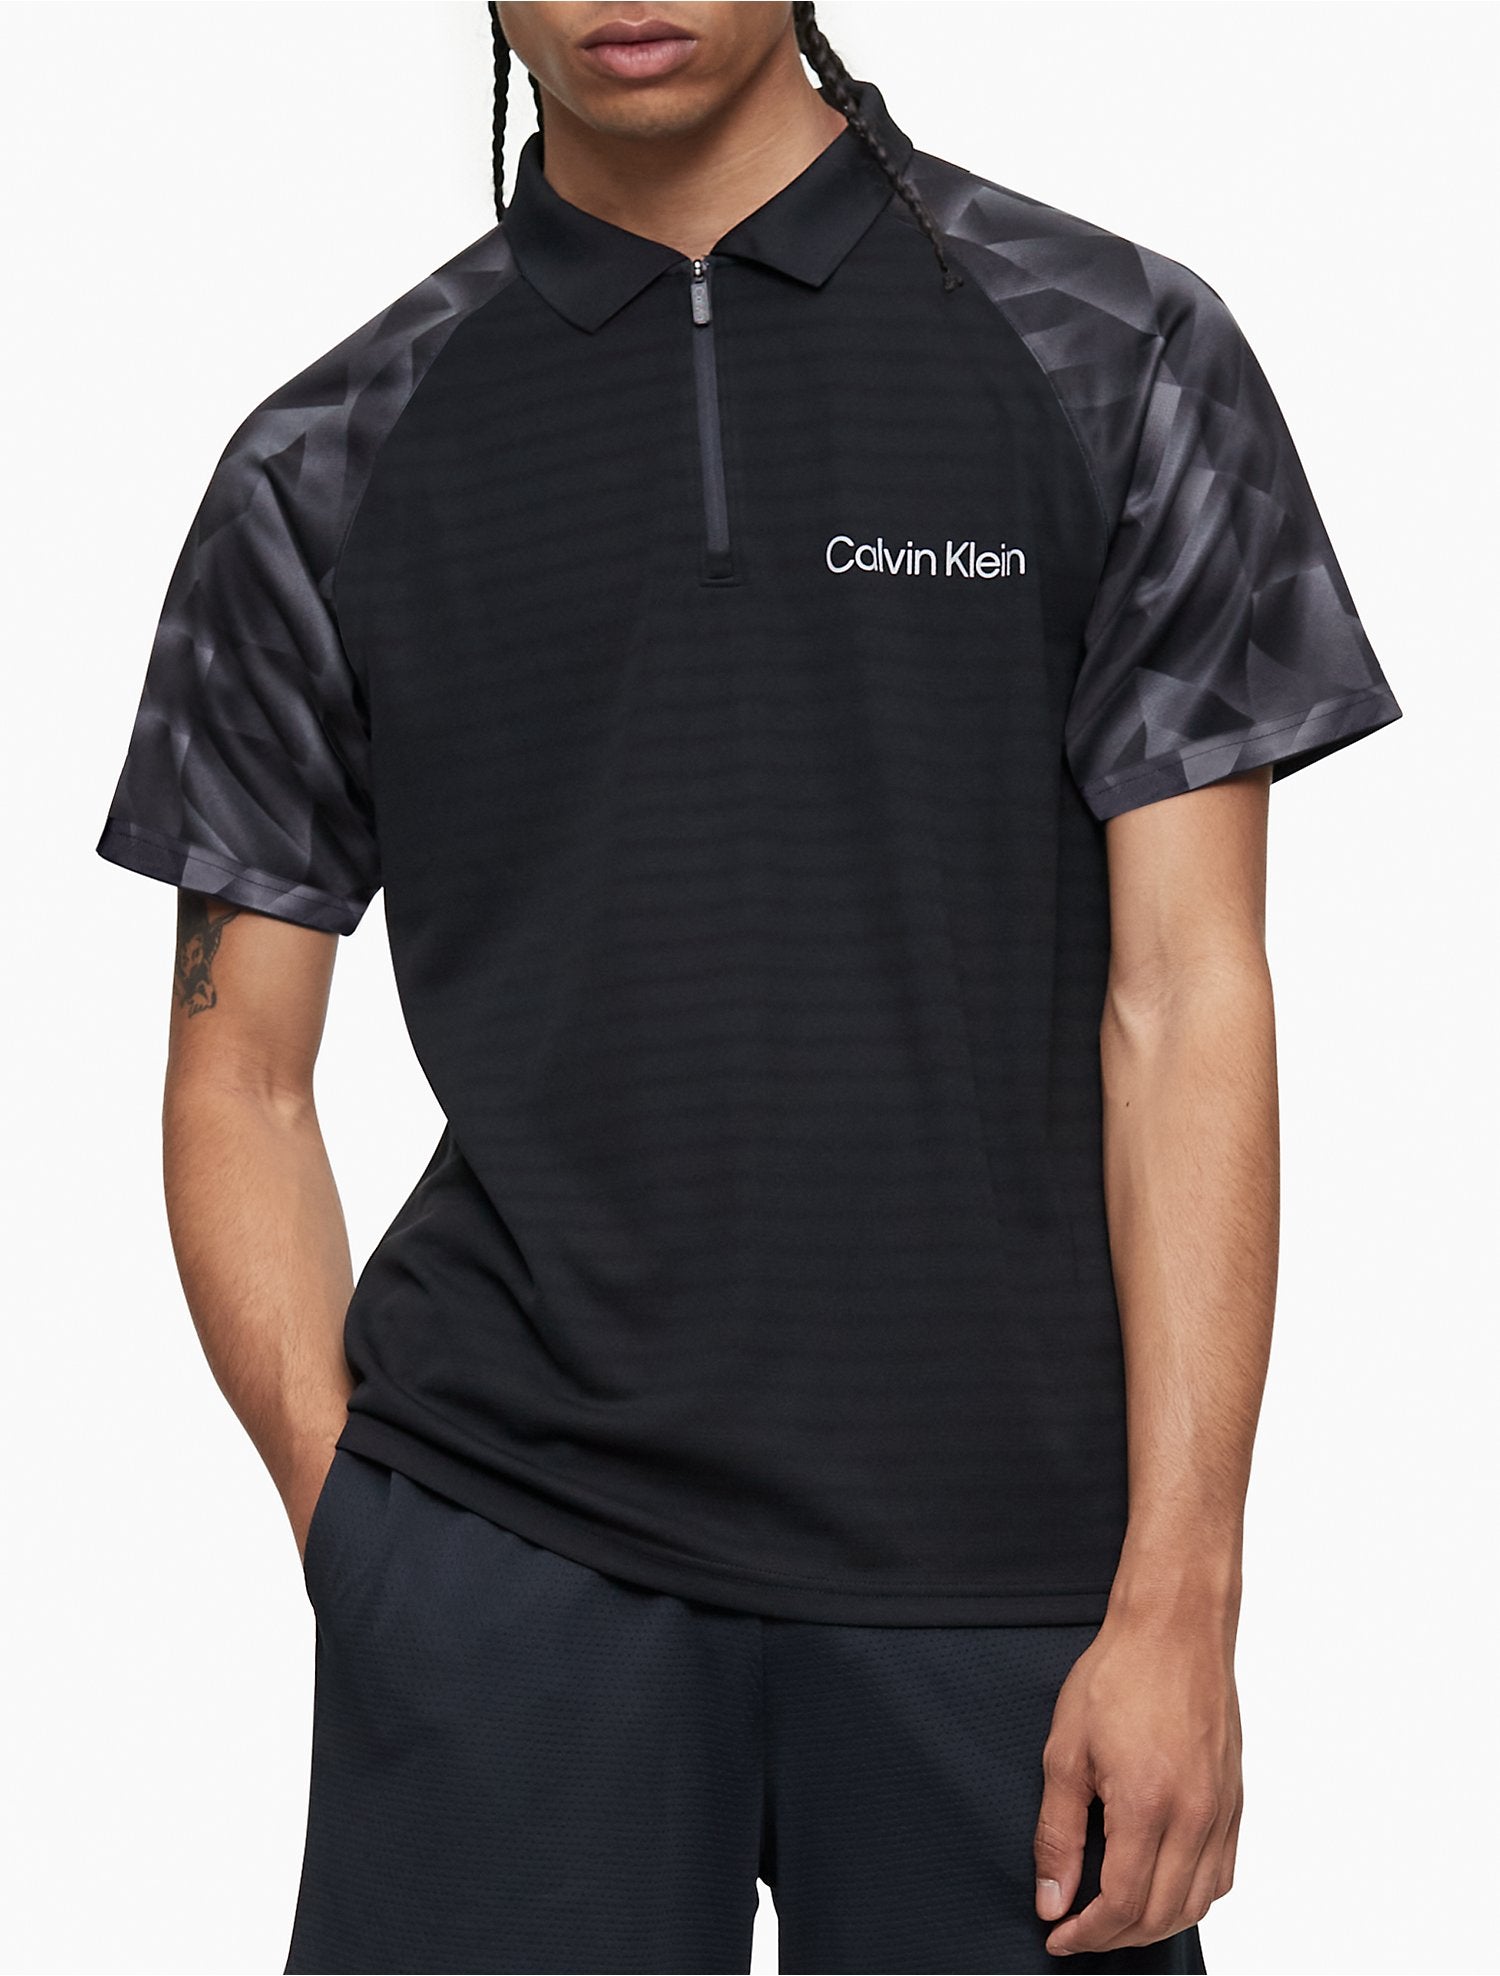 Calvin Klein Performance Printed Zip Polo Shirt - Men